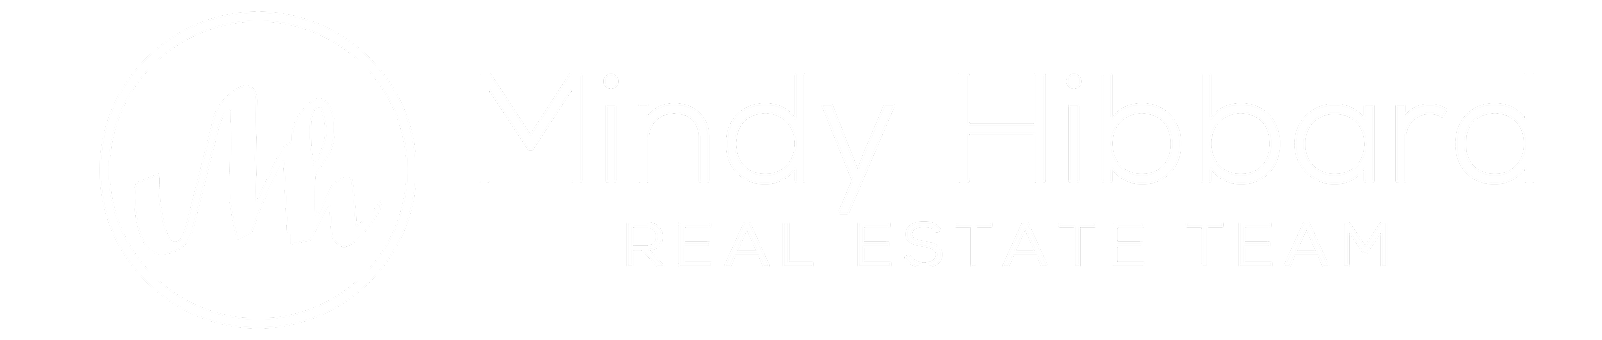 mindy hibbard logo